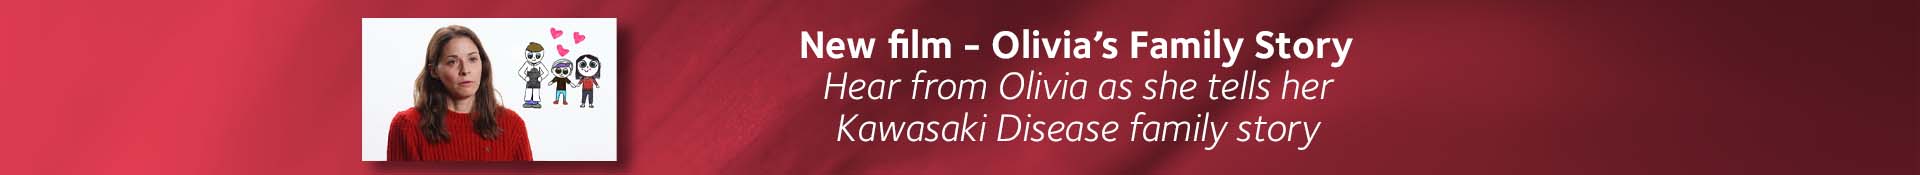 New film - Olivia